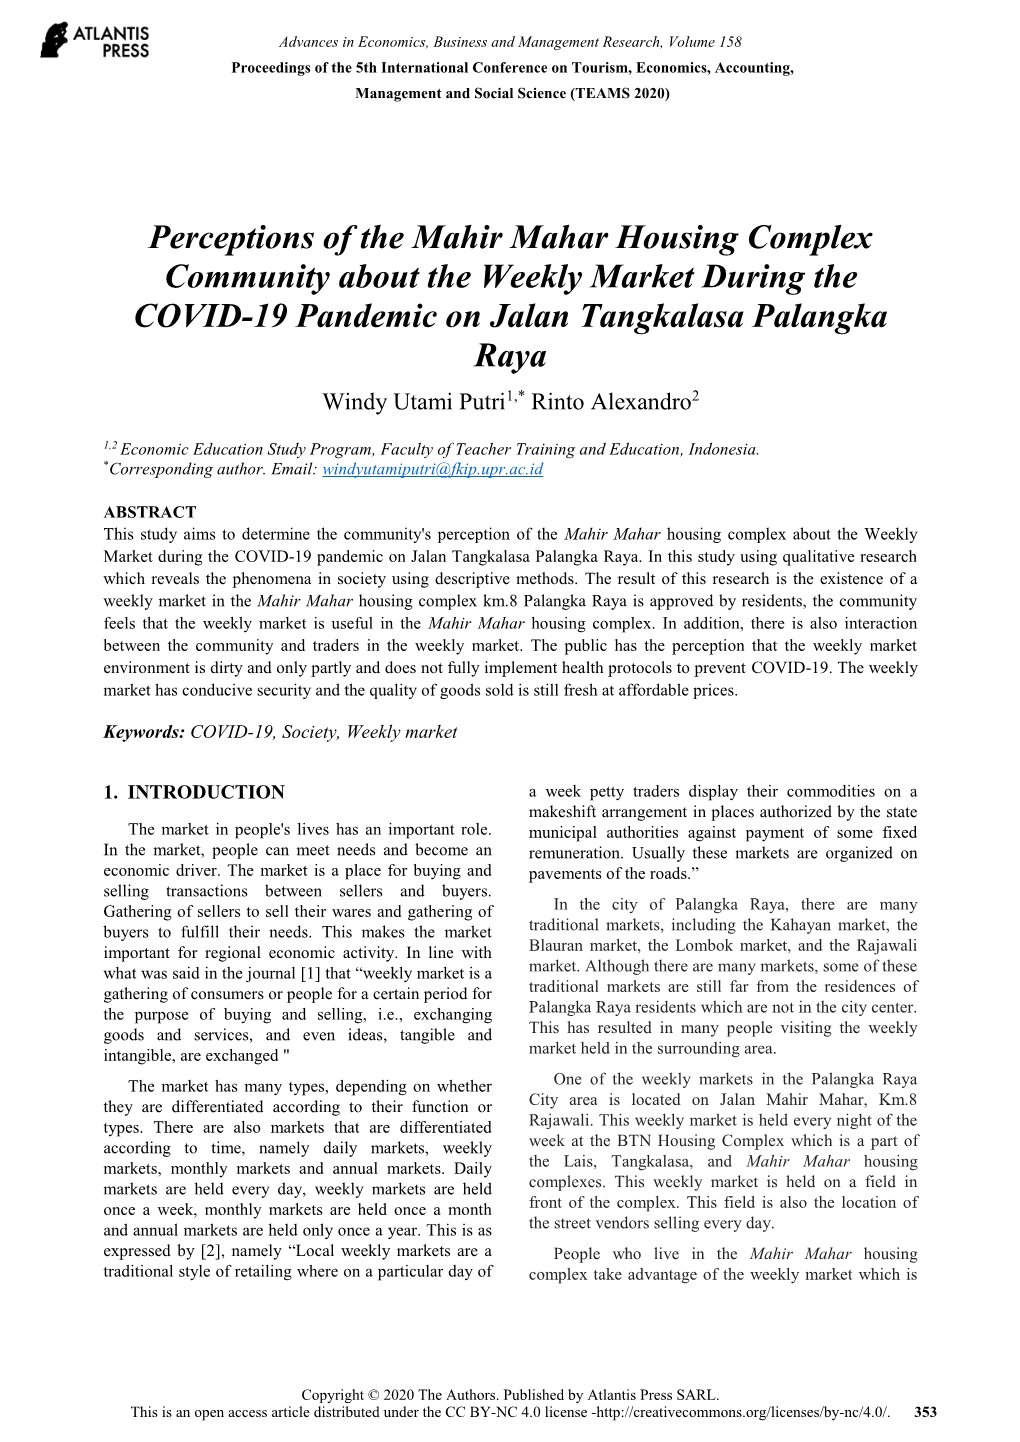 Perceptions of the Mahir Mahar Housing Complex Community